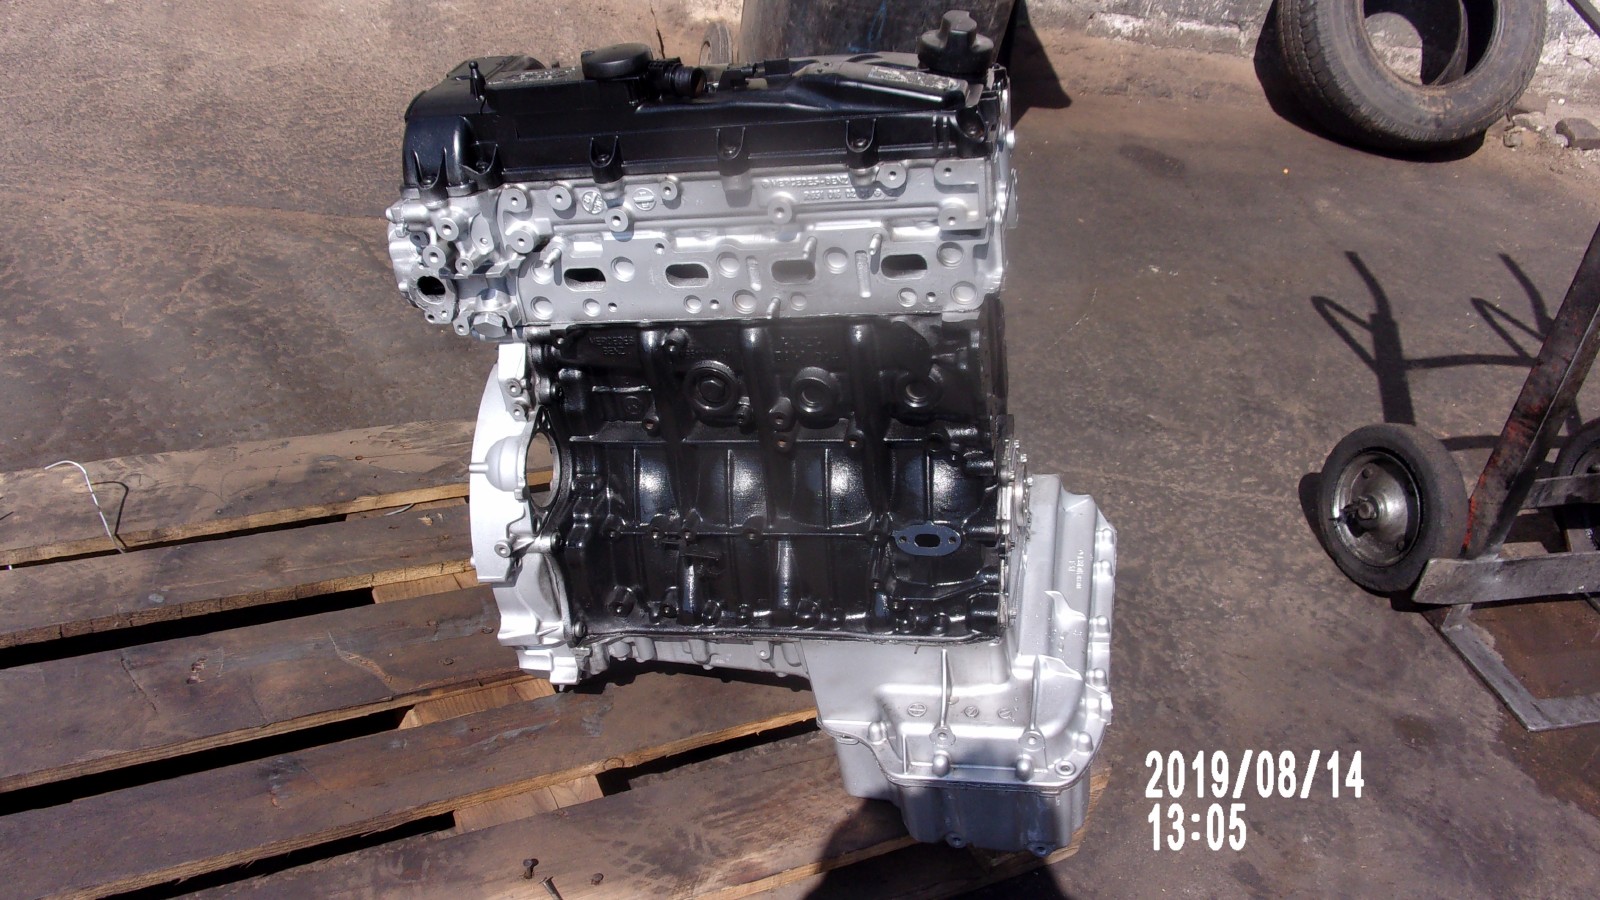 C220 engine